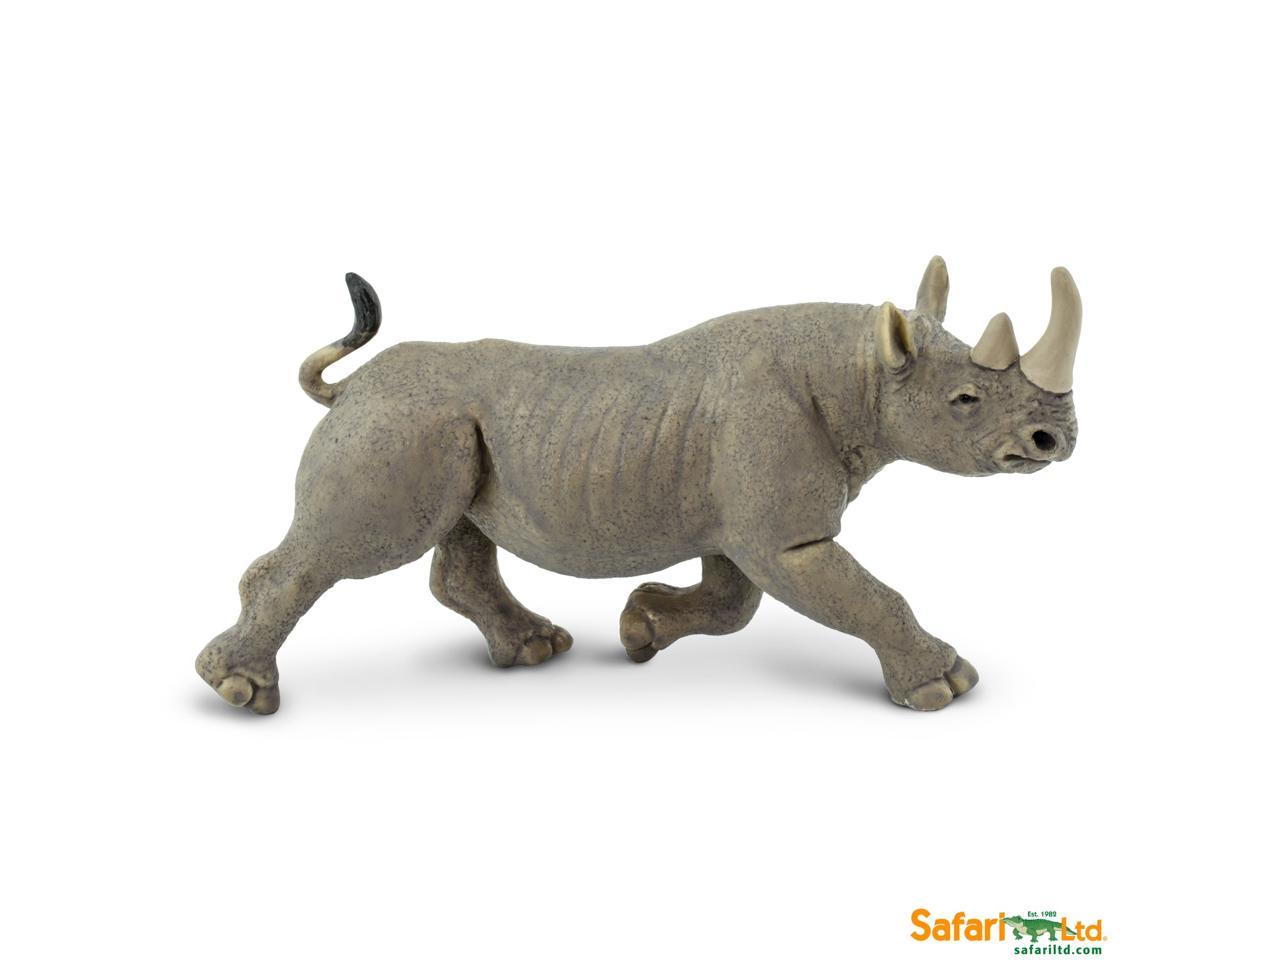 Indian Rhino Wild Safari Animal Figure Safari Ltd NEW Toy Mammal Kid Educational 